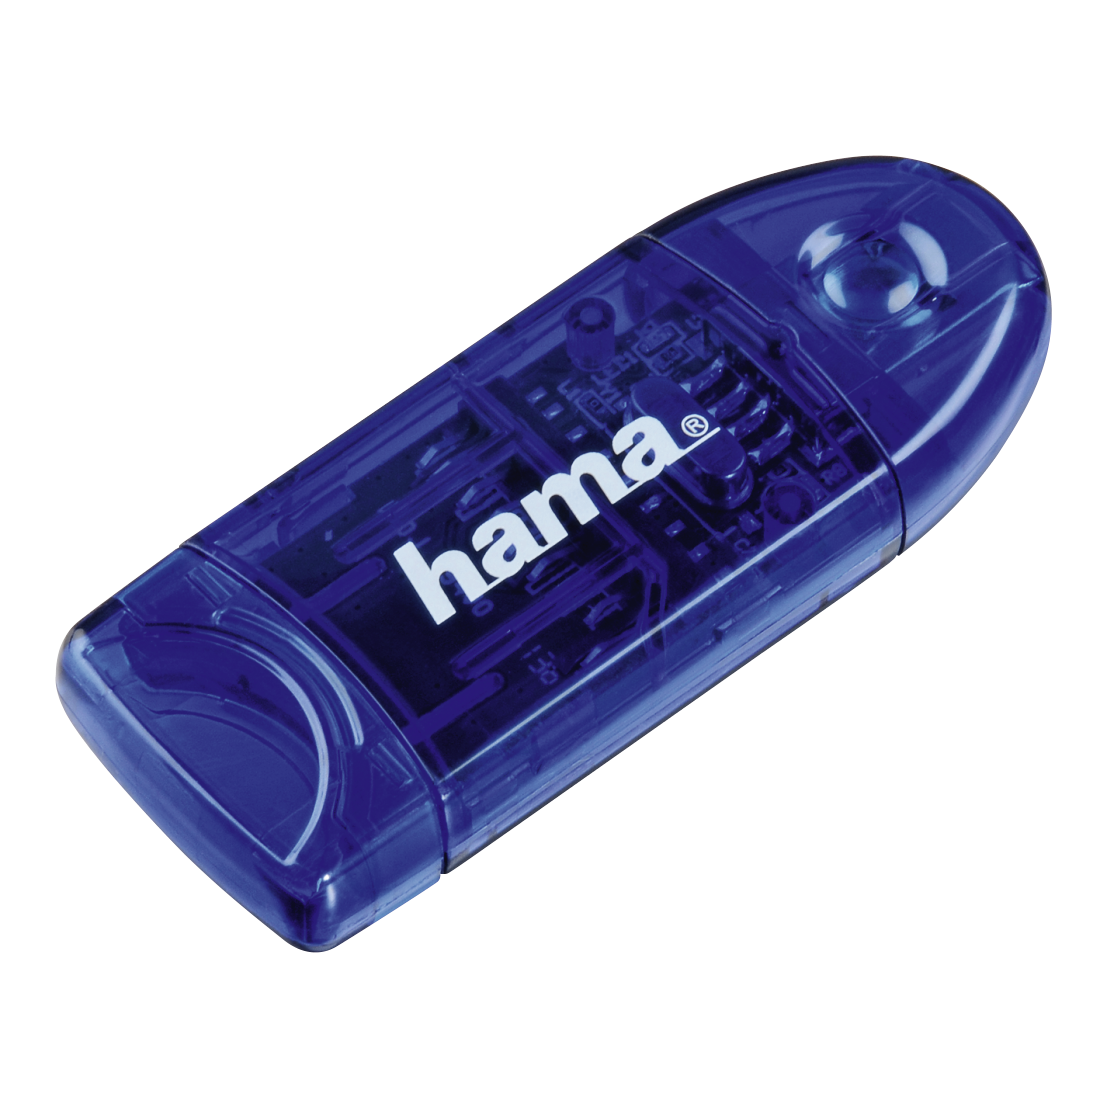 Hama USB 2.0 SD Card Reader, blue